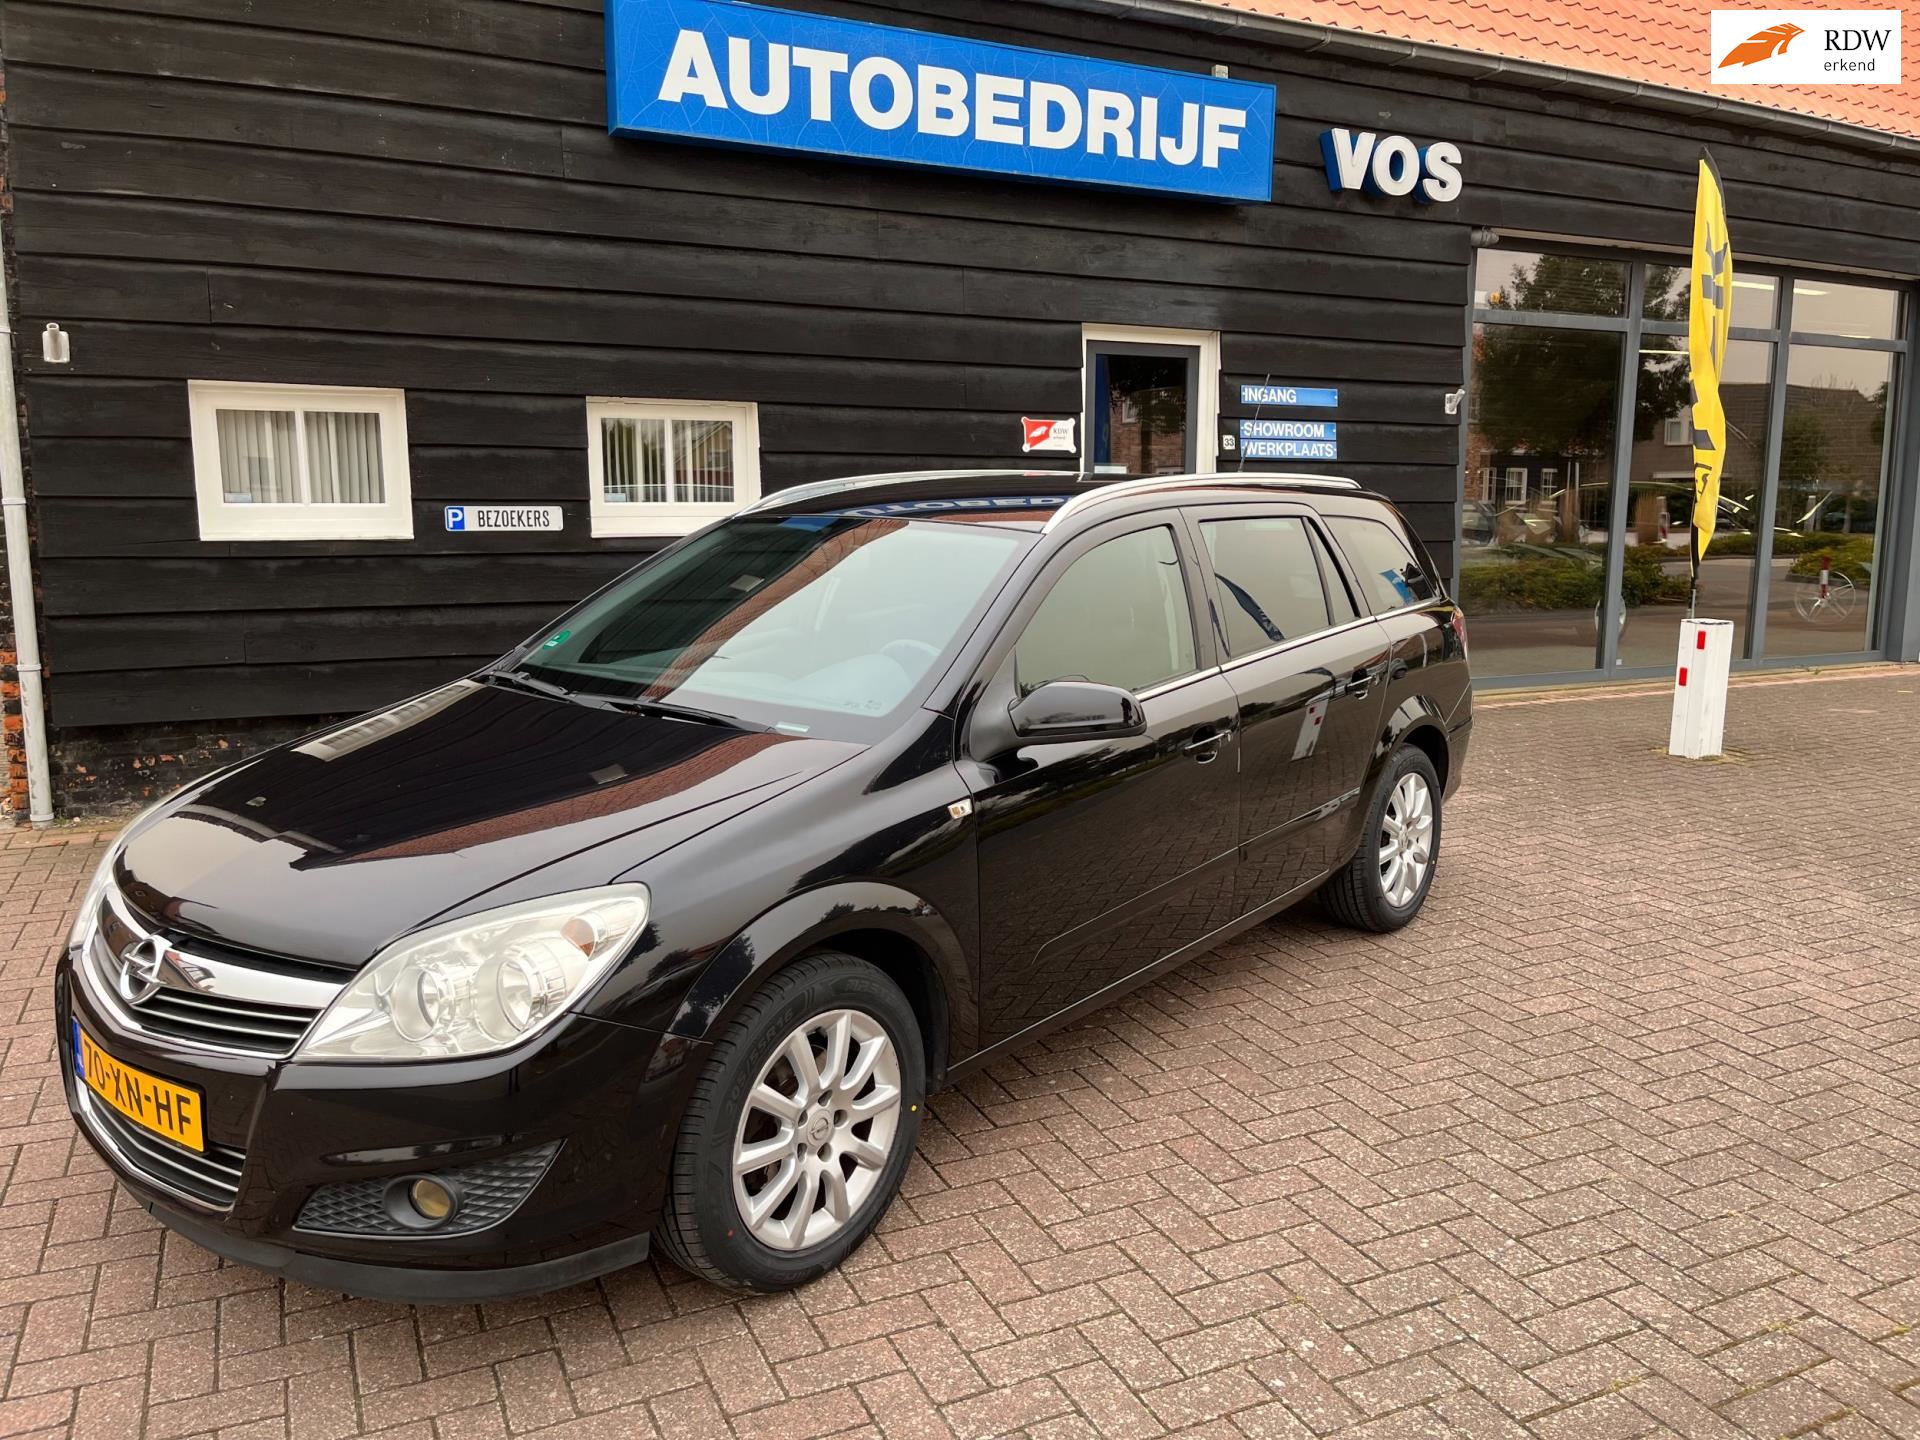 Opel Astra Wagon occasion - Autobedrijf Vos